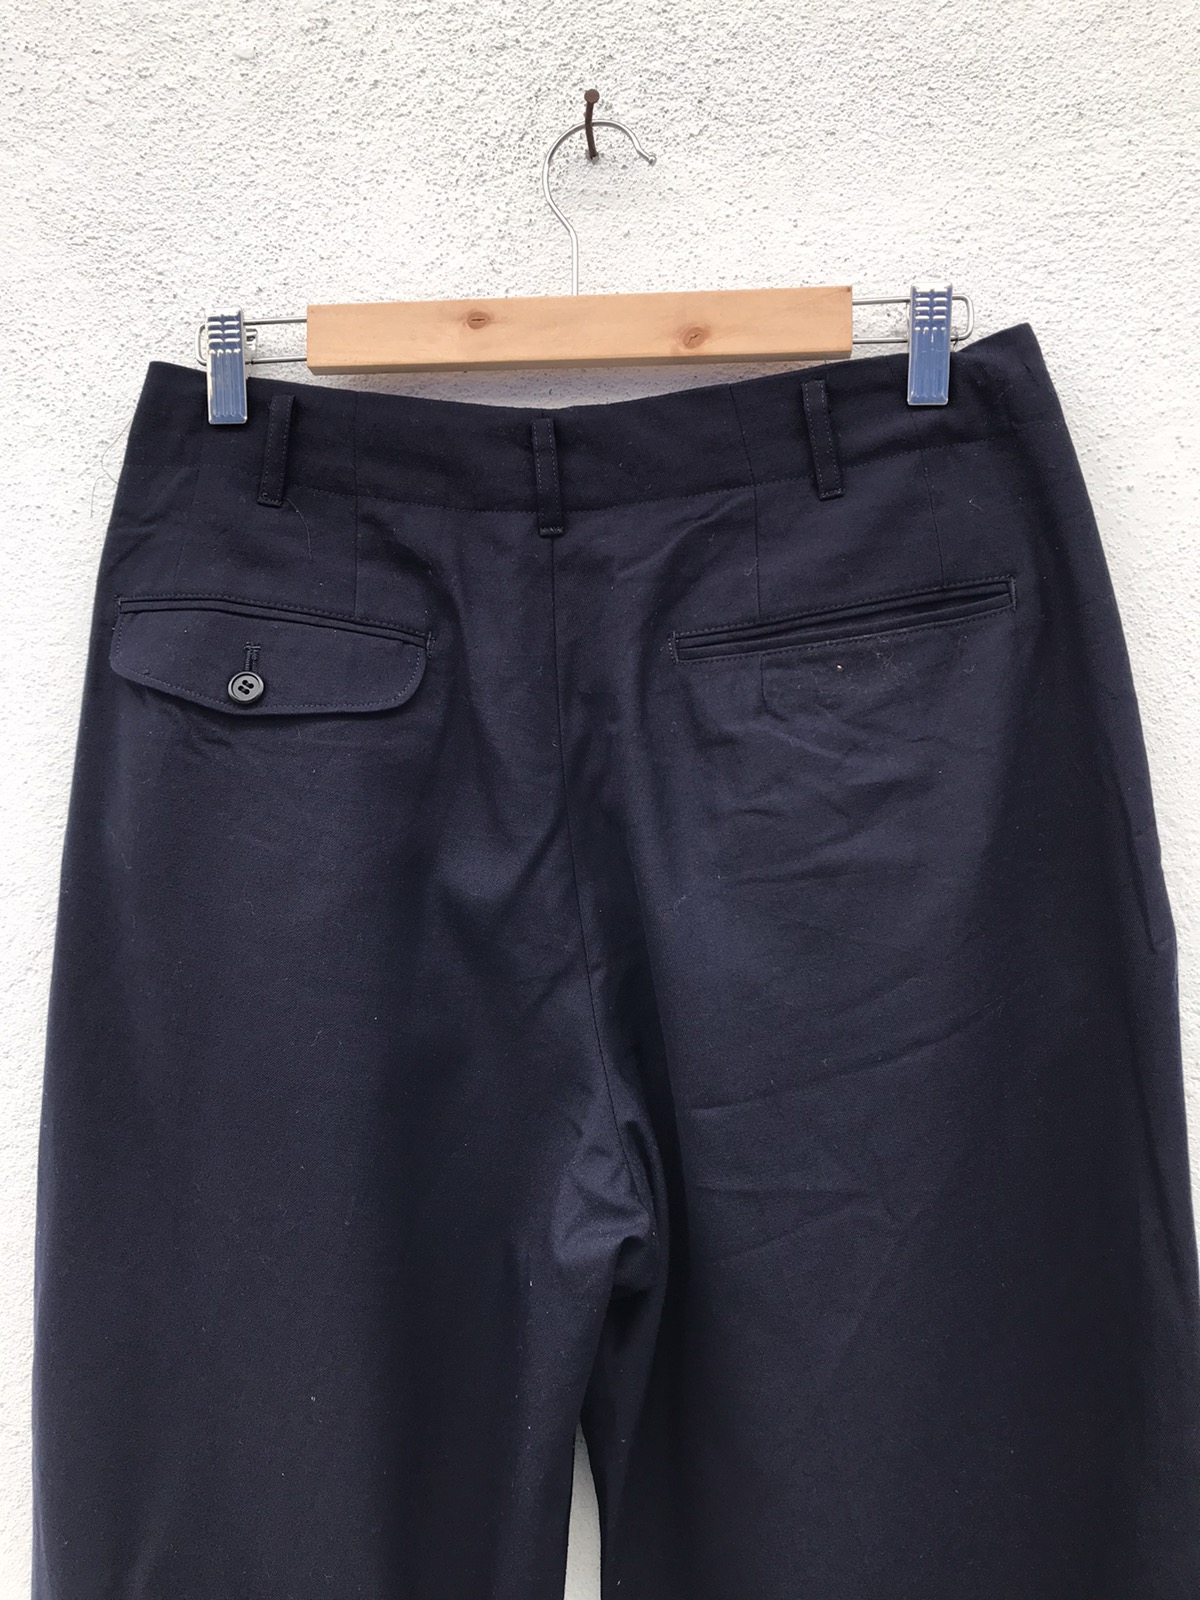 Yohji Yamamoto Central Japan Railway Company Wool Pants - 6